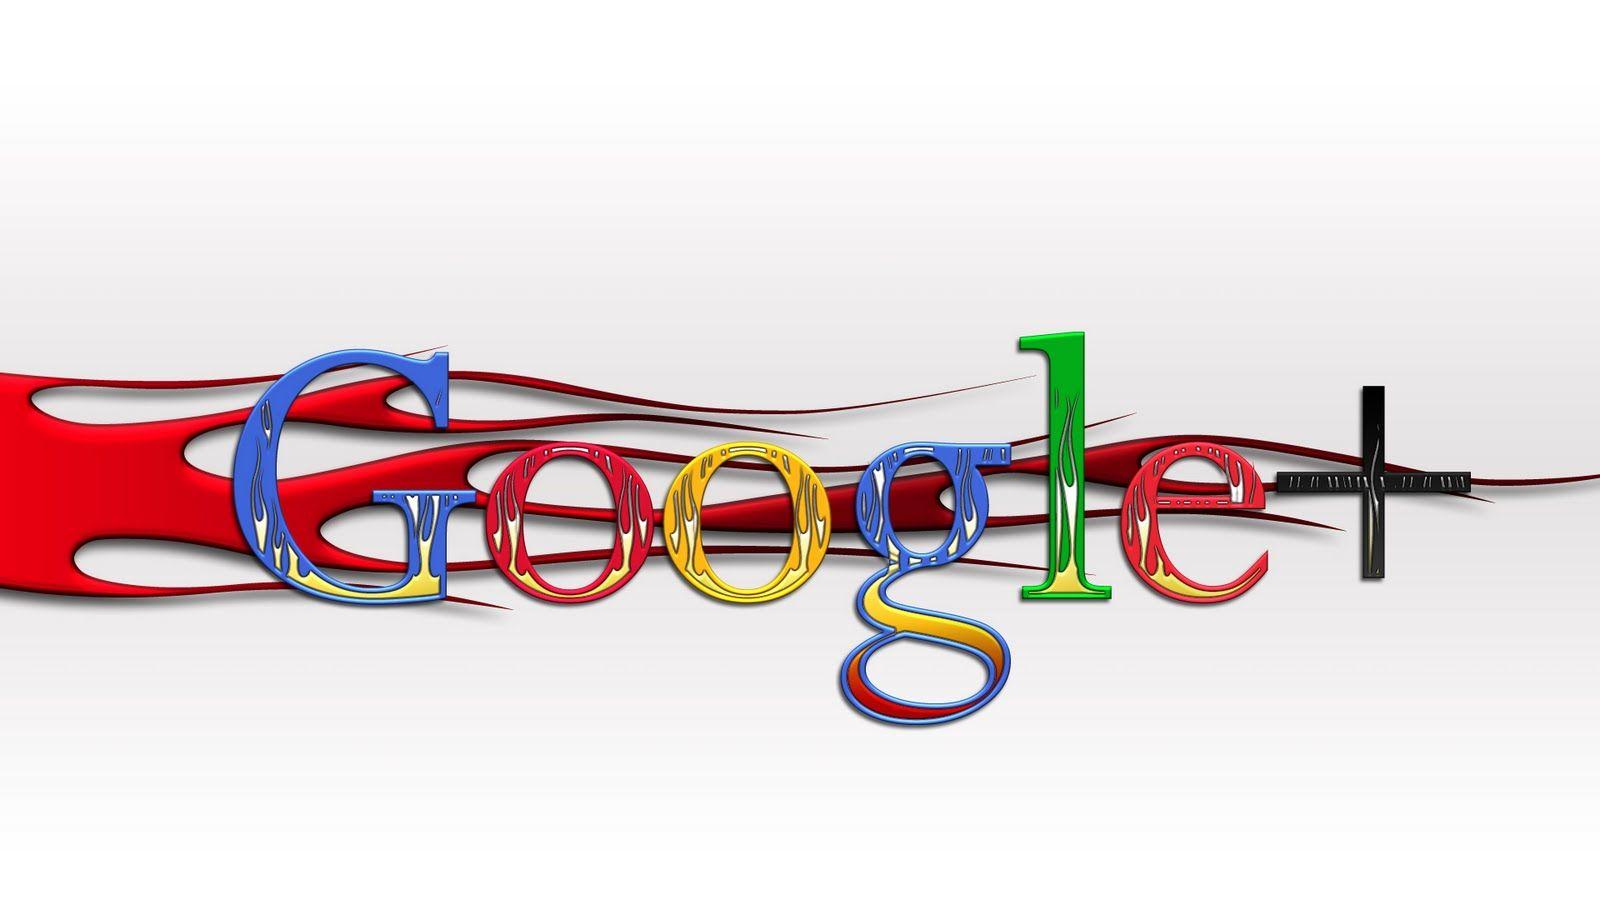 Cool Google Plus Logo - Posting From WordPress to Google+ - Jonathan Jeter